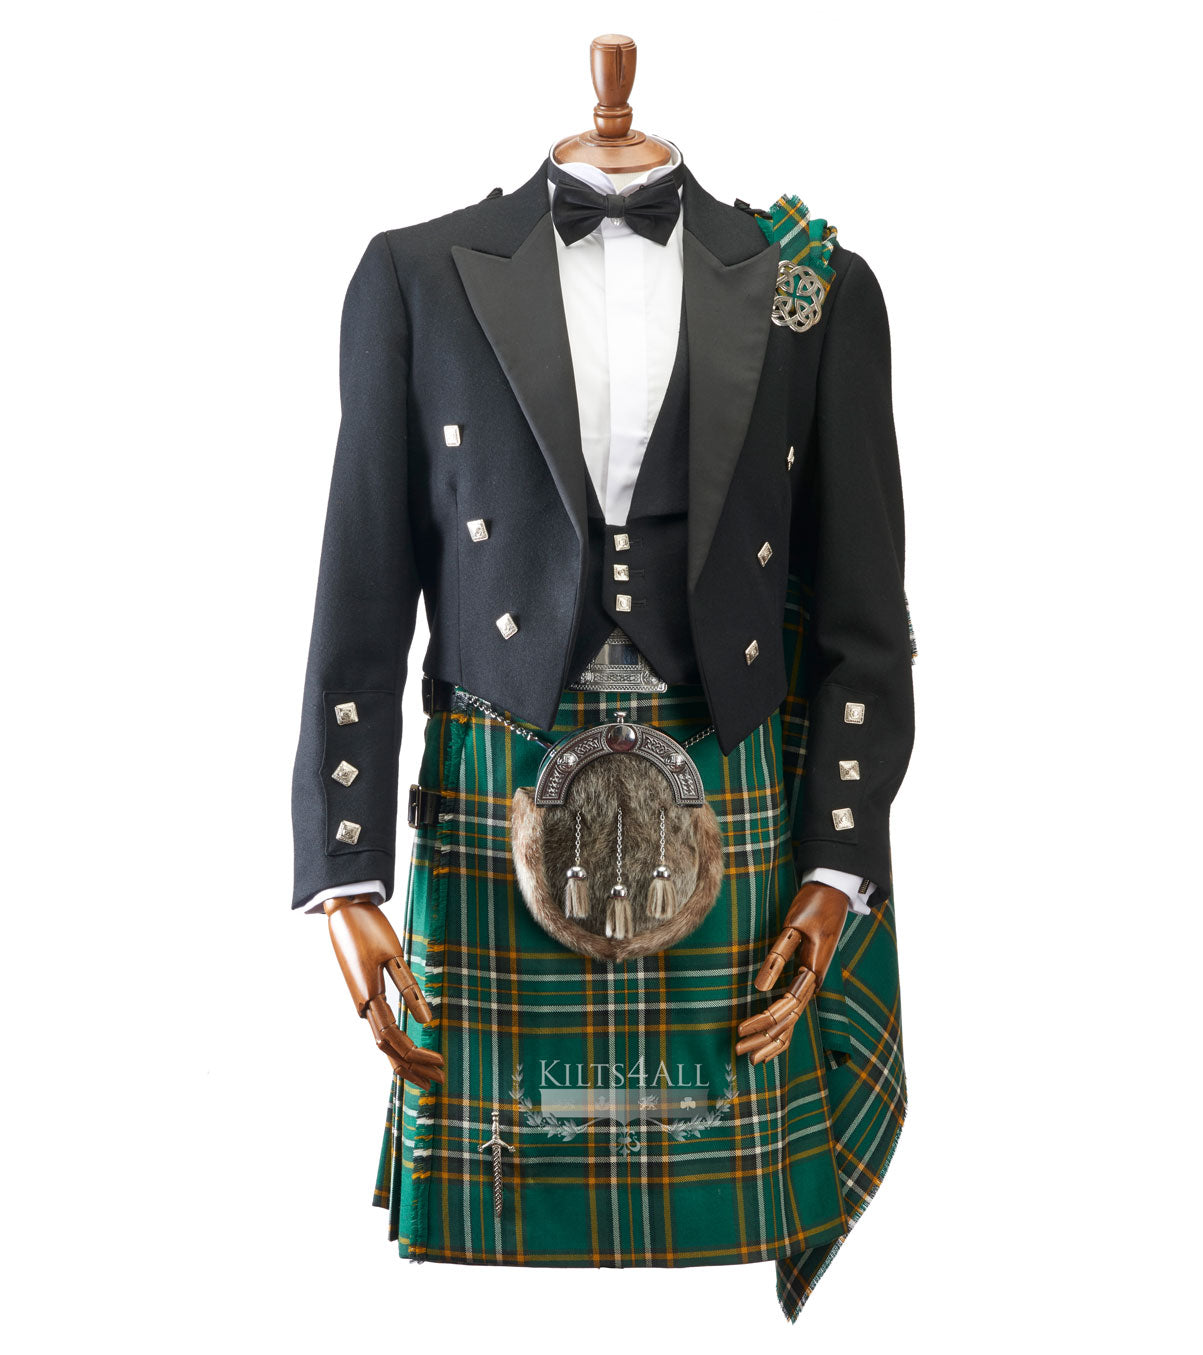 Mens Irish Tartan Kilt Outfit to Hire - Prince Charlie Jacket & 3 Button Waistcoat